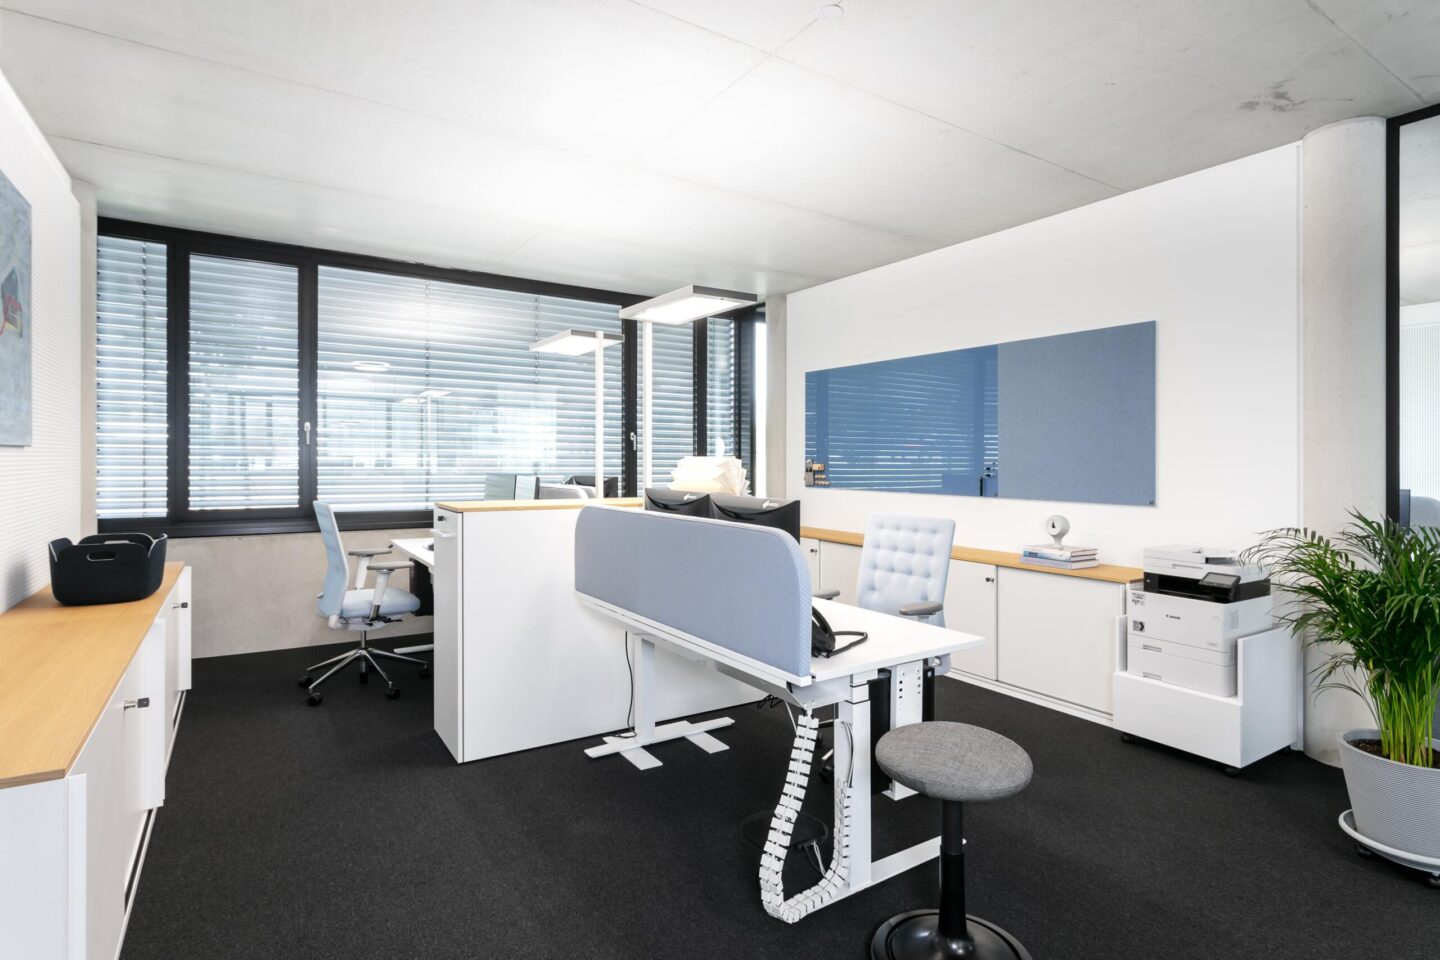 BSHR Tax Consultants Ettlingen │ electrically height-adjustable desks │ digital tax accounting